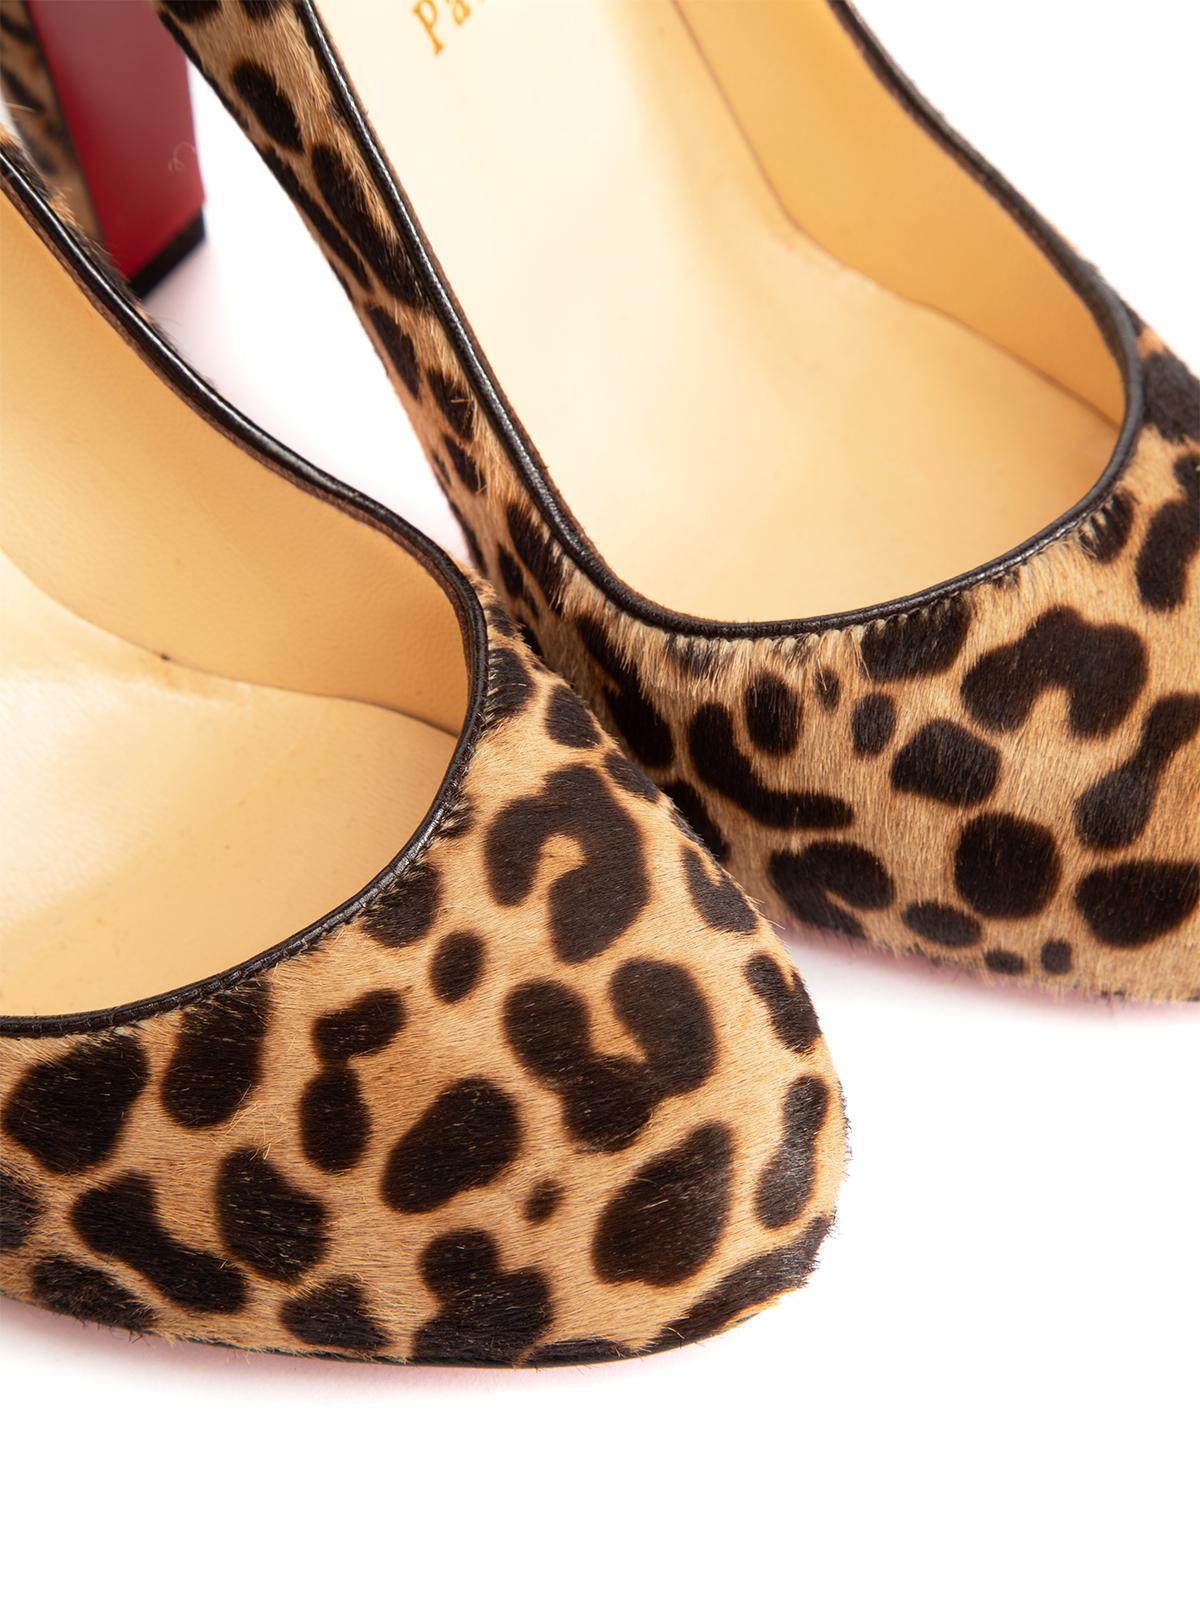 Pre-Loved Christian Louboutin Women's Round Toe Pony Hair Leopard Print Heels 4